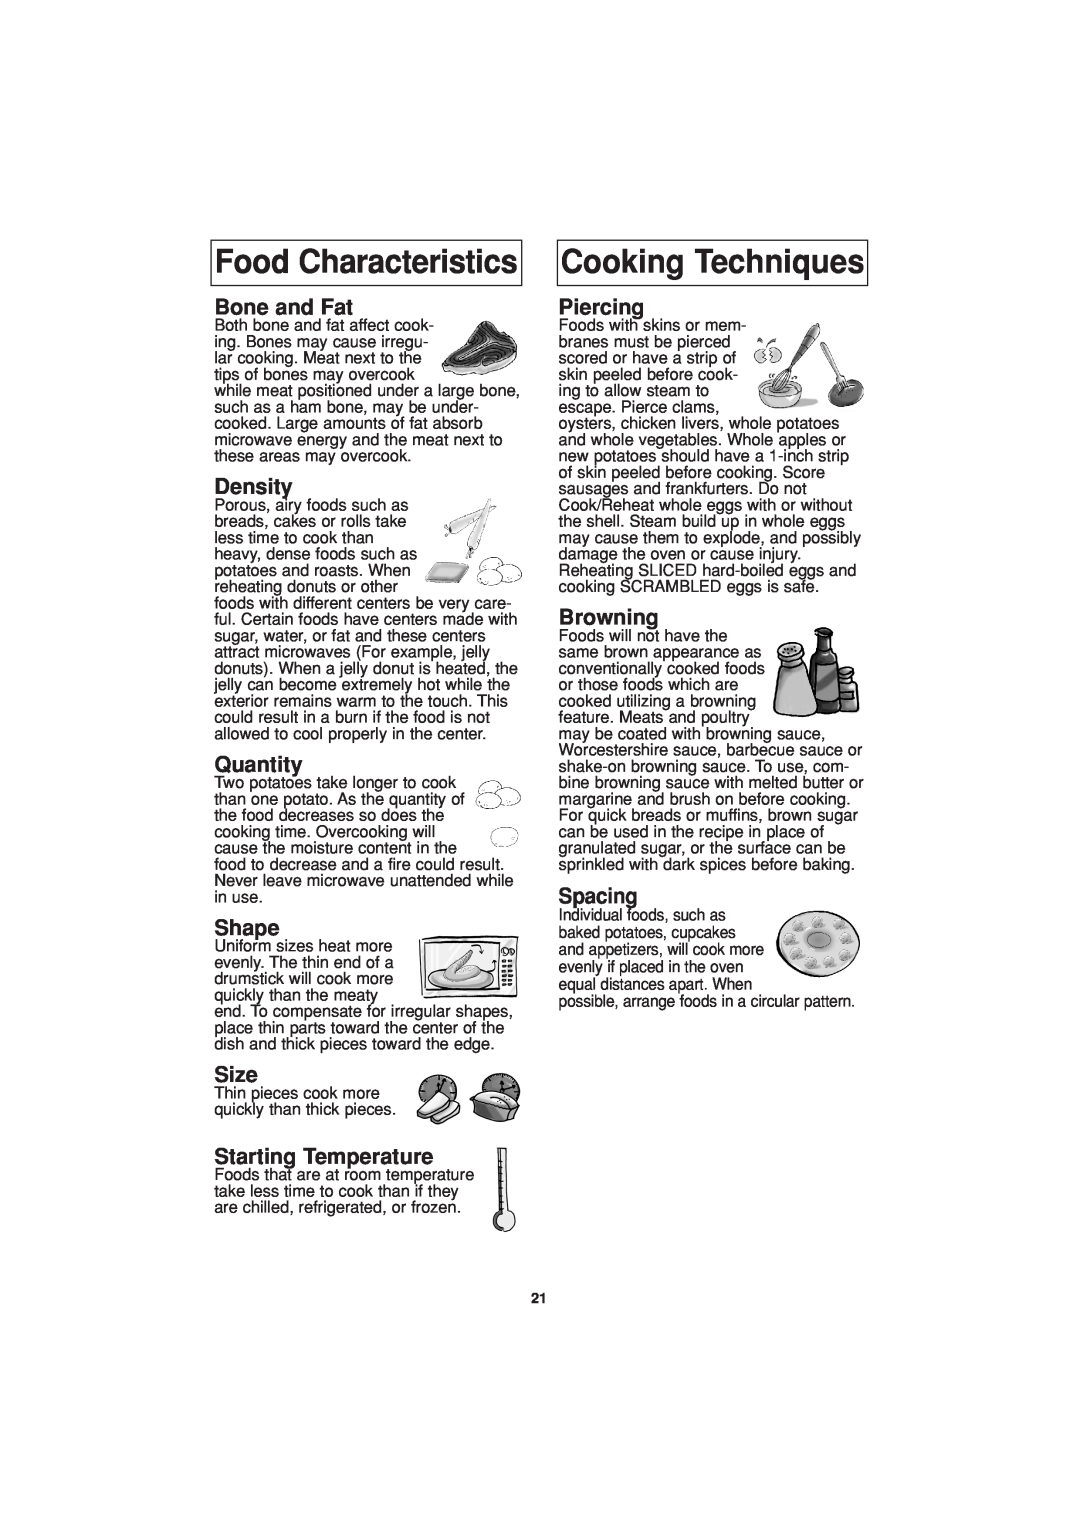 Panasonic NN-H634 Food Characteristics, Cooking Techniques, Bone and Fat, Density, Quantity, Shape, Size, Piercing 